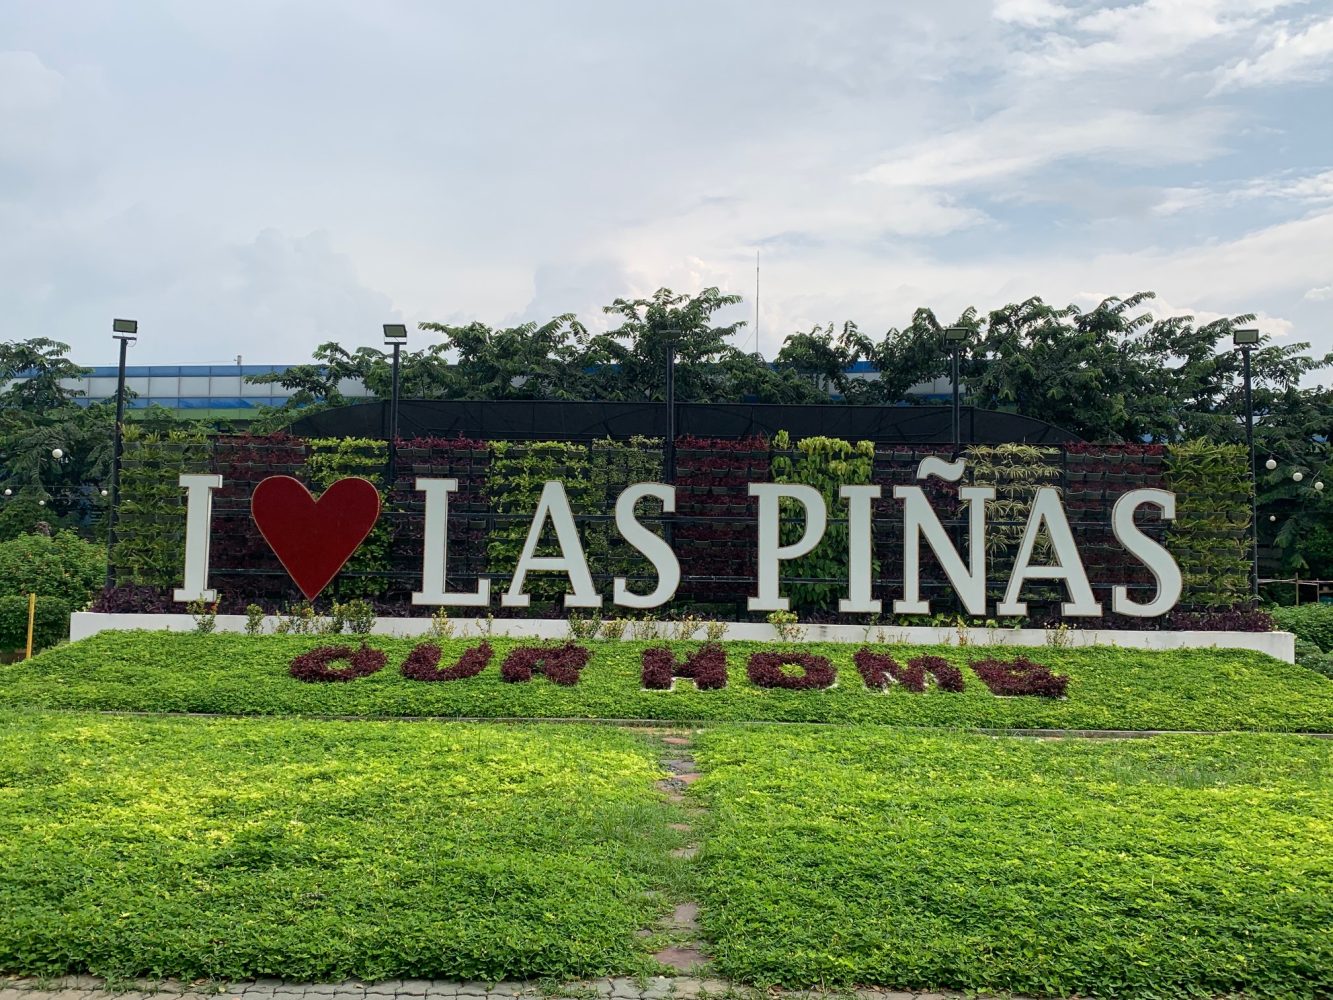 City of Las Piñas, Our Home